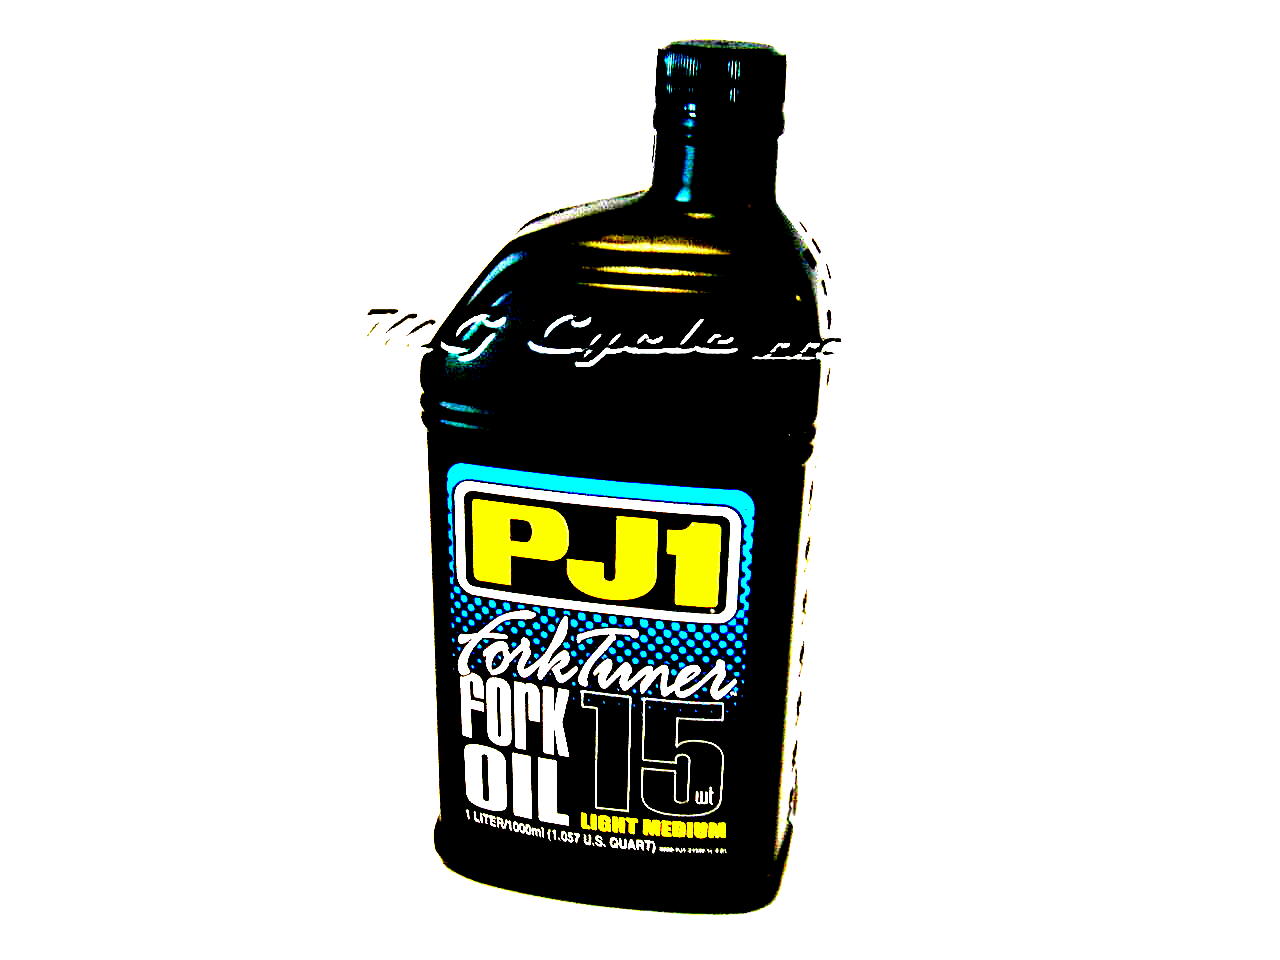 PJ1 Fork Tuner fork oil 15W light-medium, 1 liter bottle - Click Image to Close